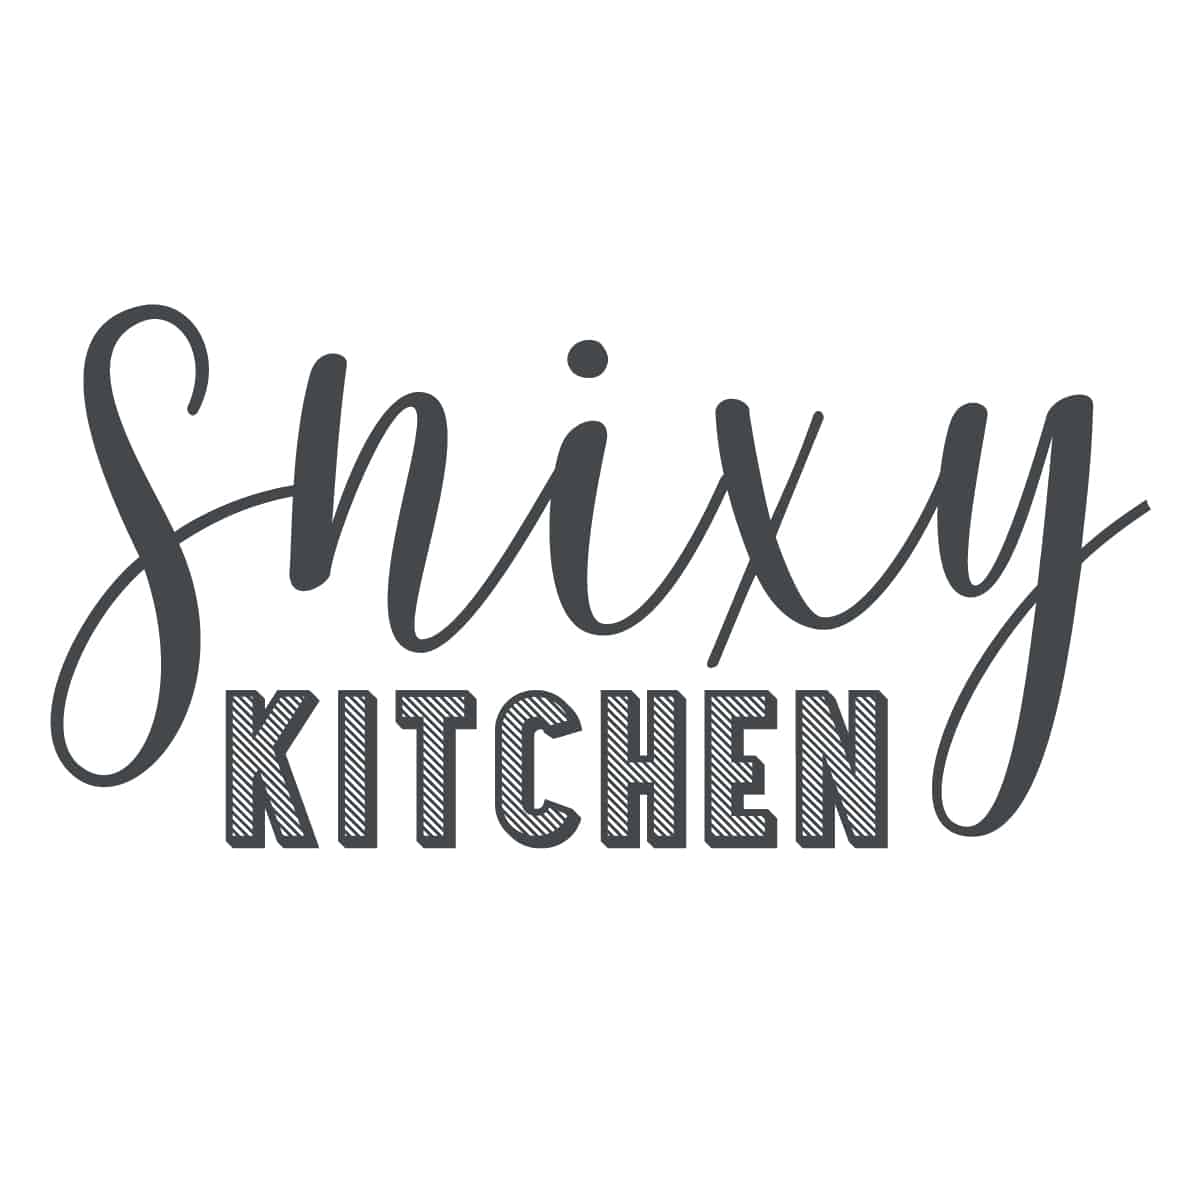 KitchenAid - Snixy Kitchen creates thinly-sliced radish for her